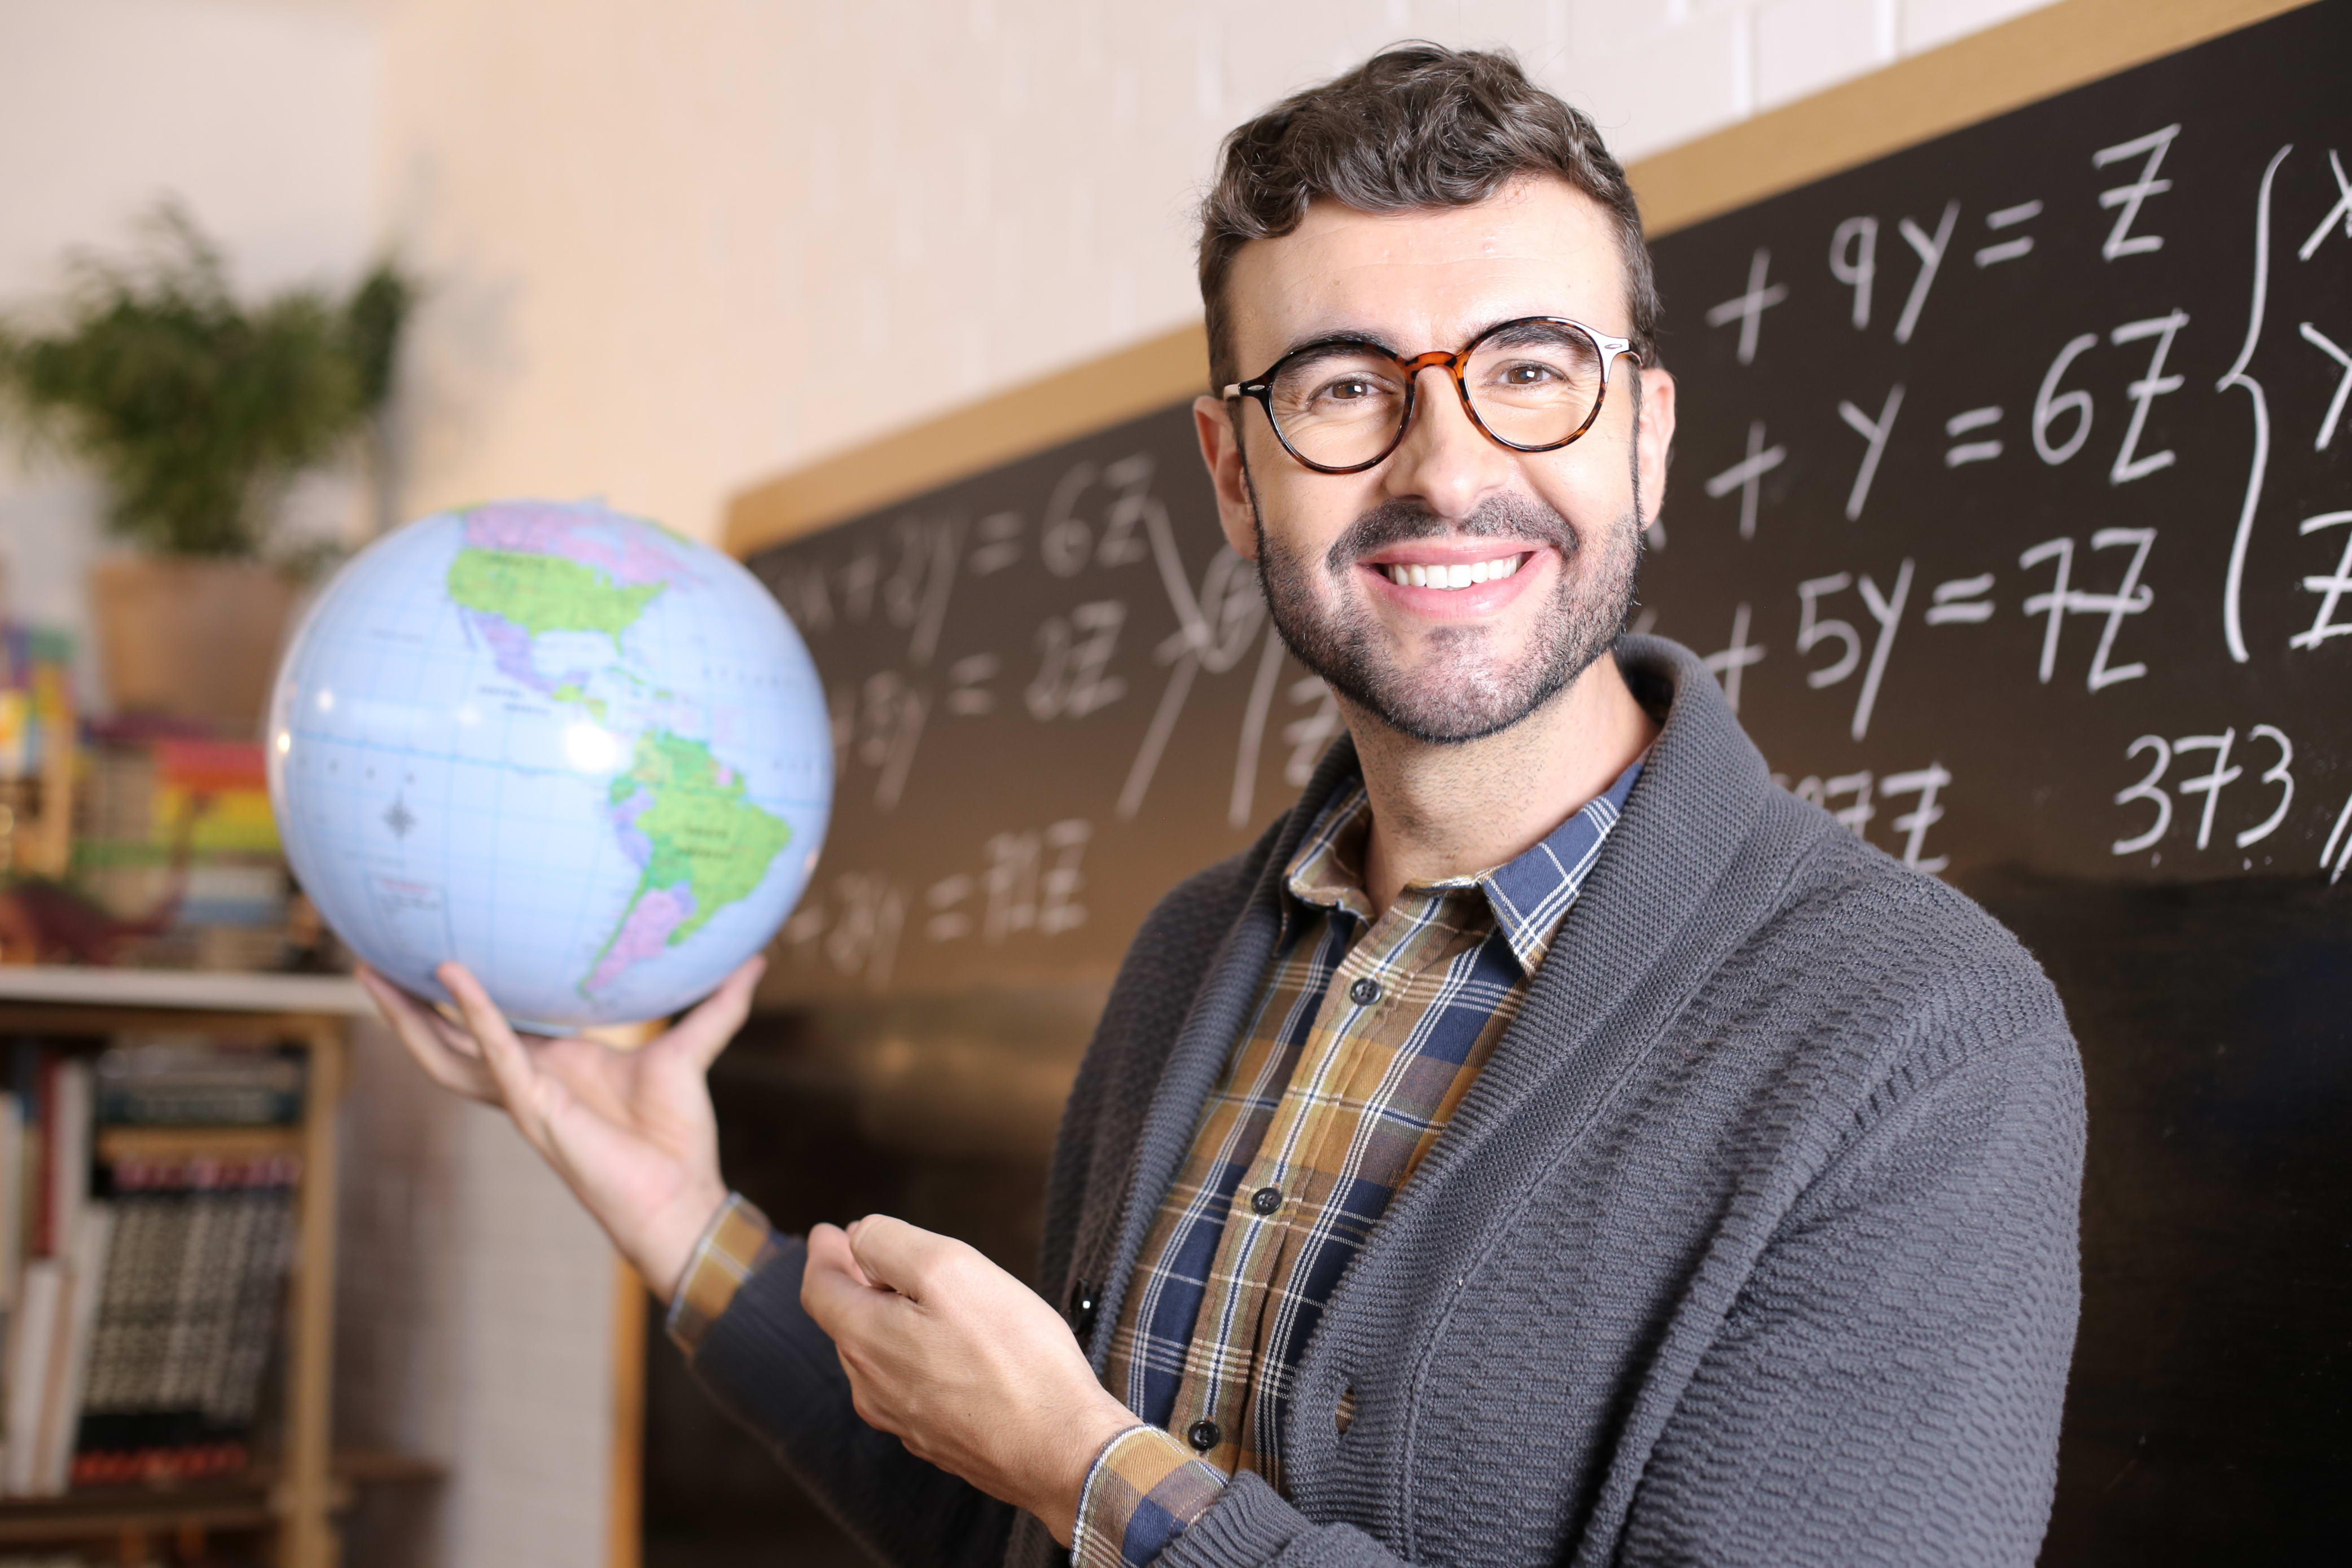 teacher holding a globe in a classroom